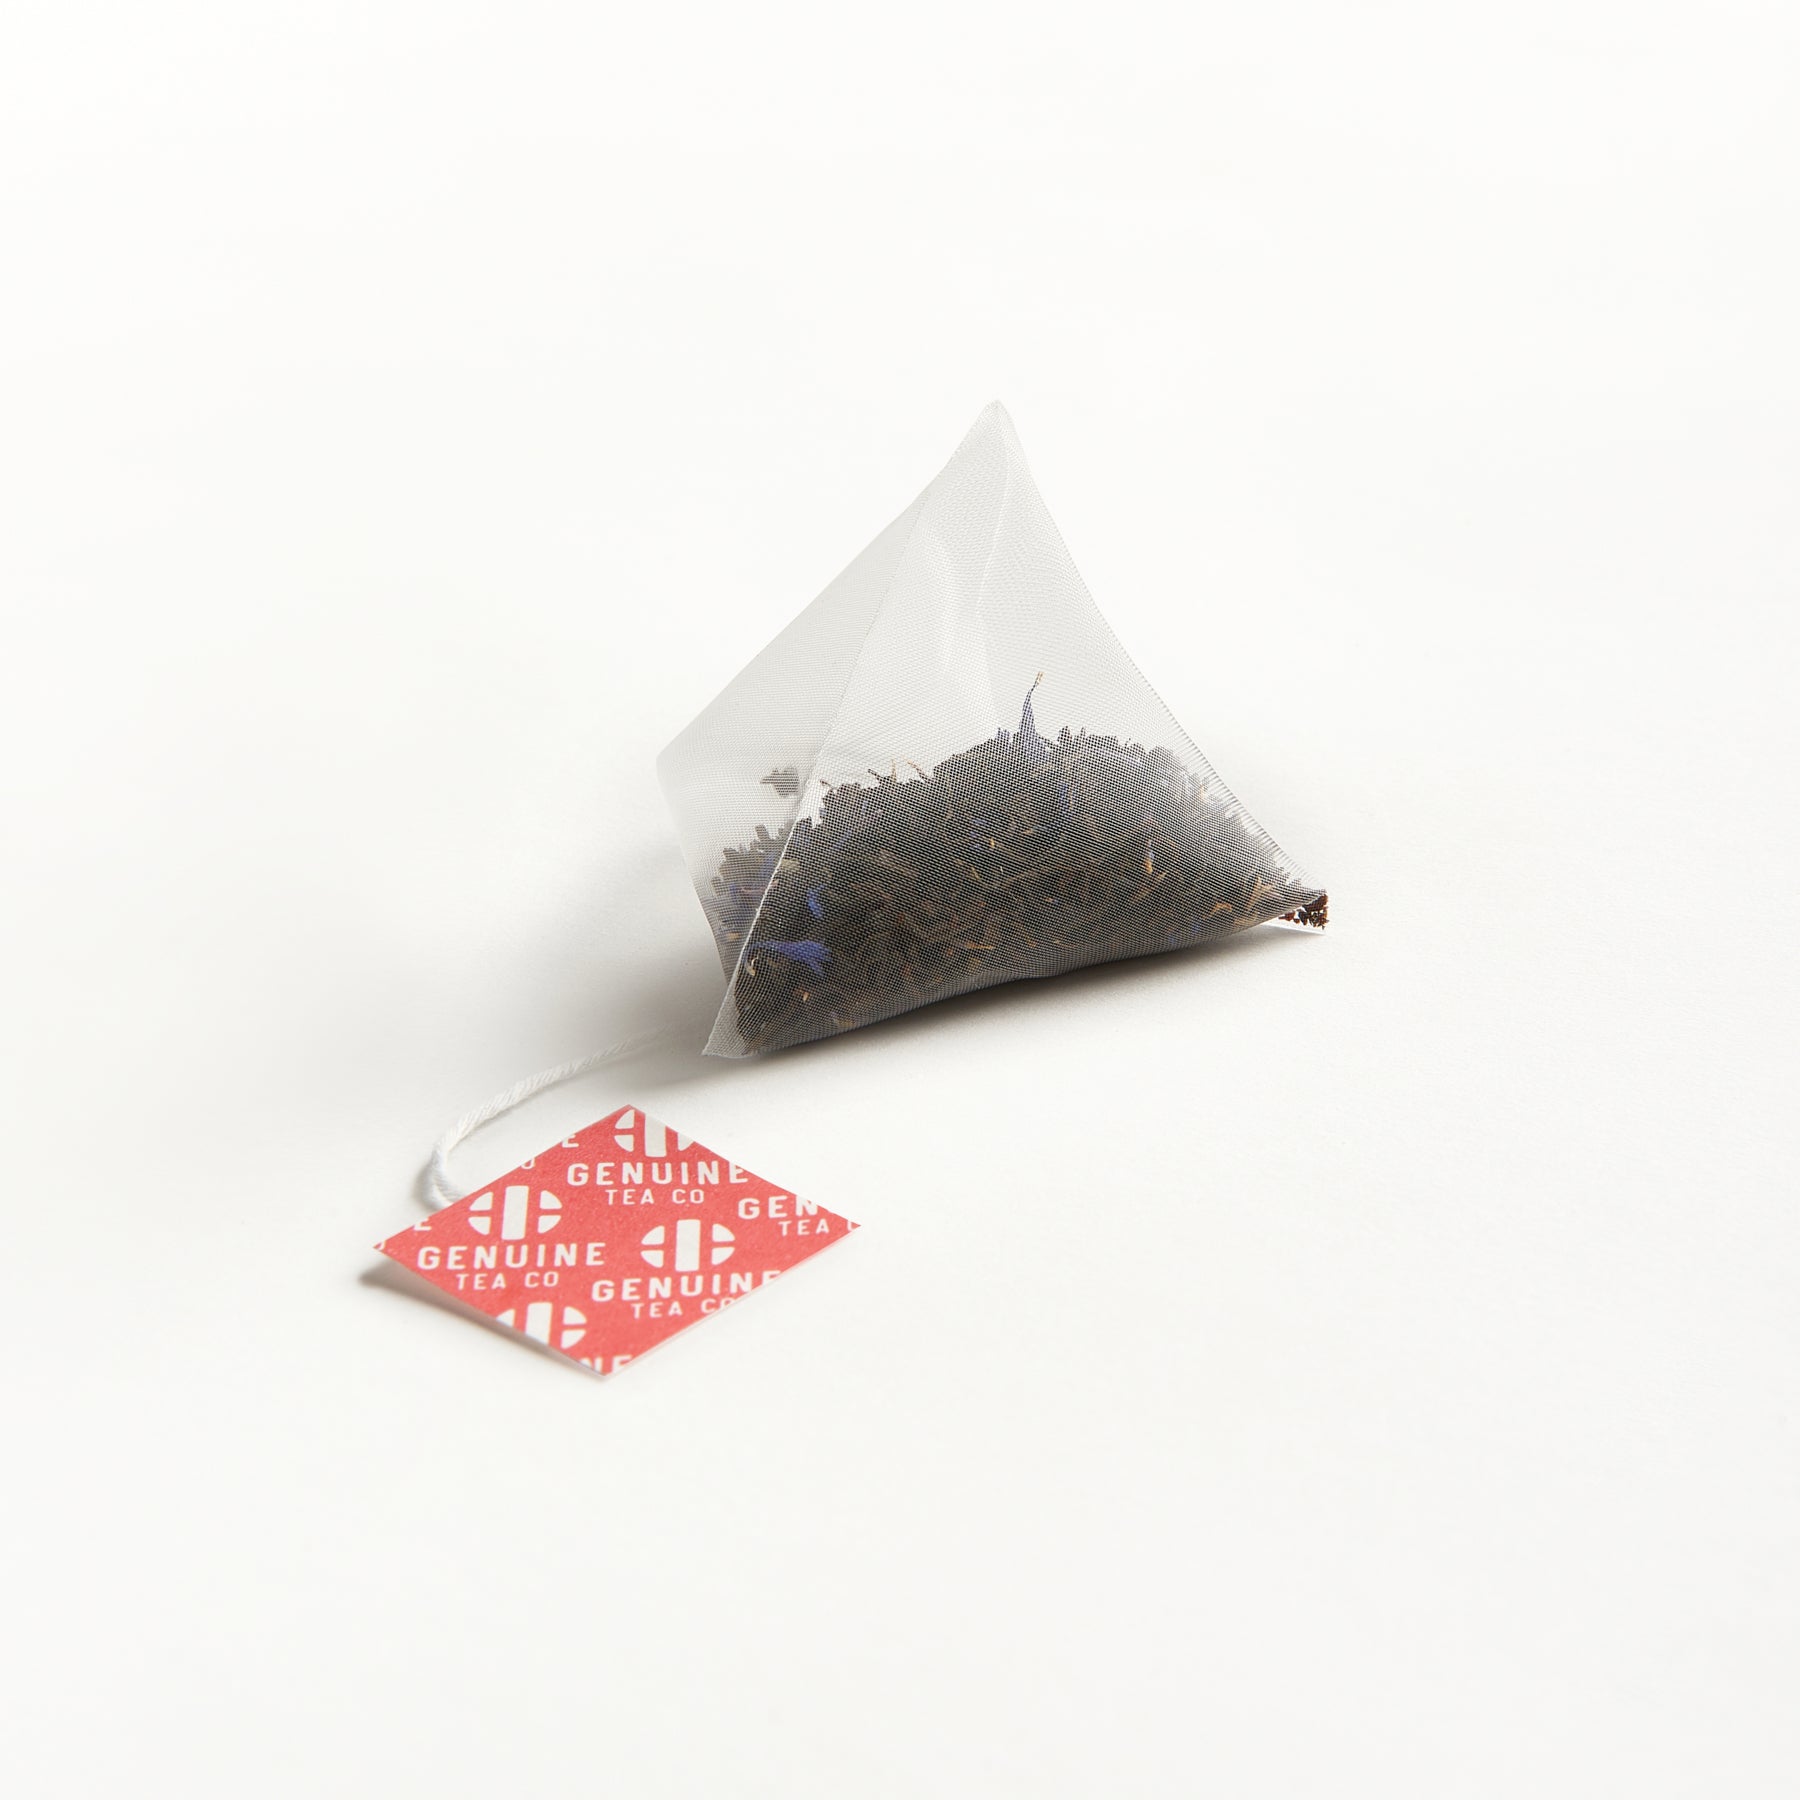 Cream of Earl Grey Biodegradable Plant-based Pyramid Tea Bags Looseleaf Toronto Canada